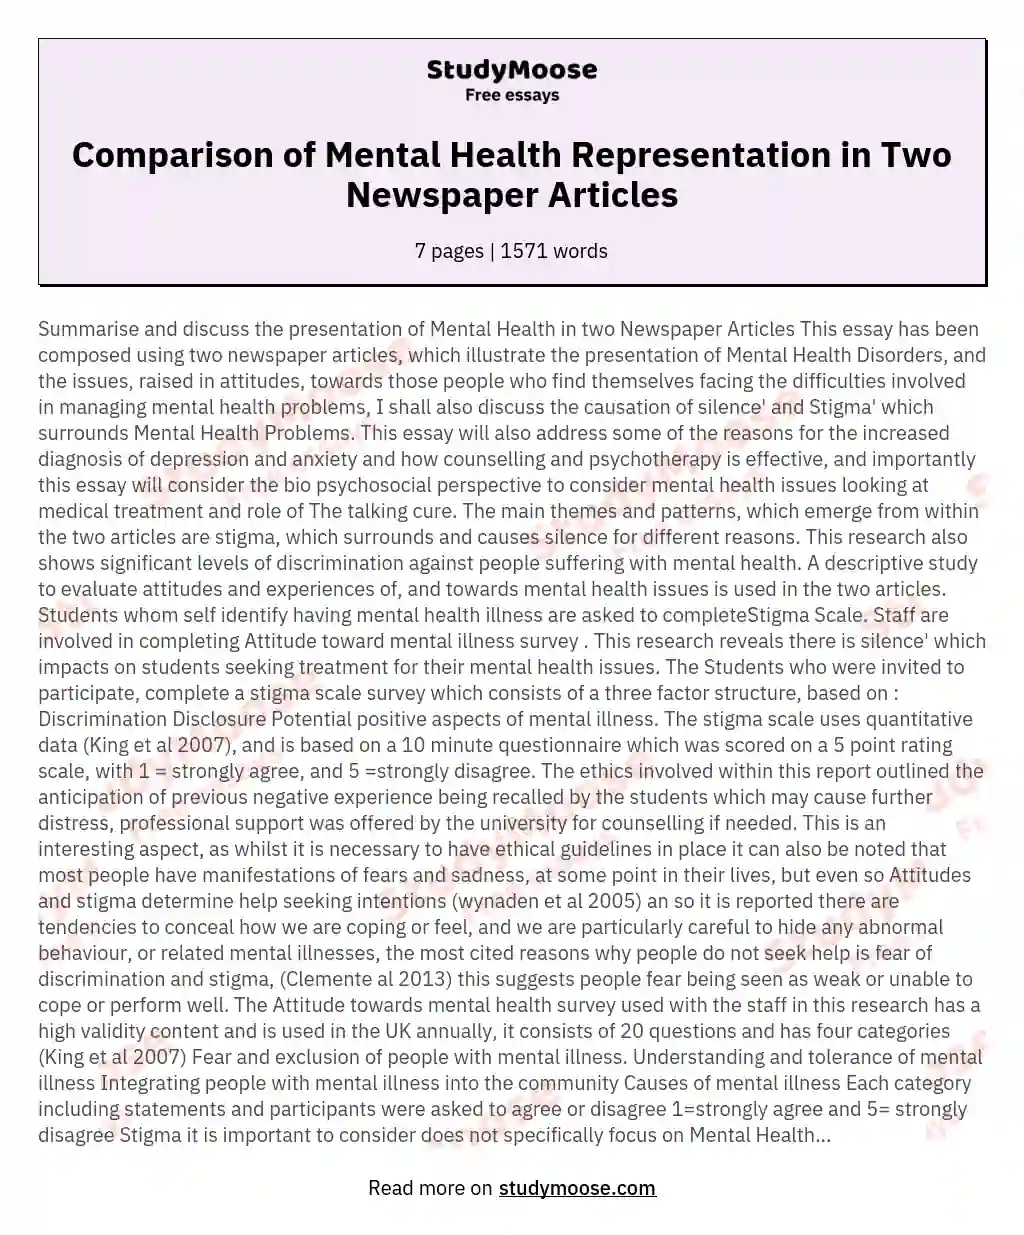 Comparison of Mental Health Representation in Two Newspaper Articles essay